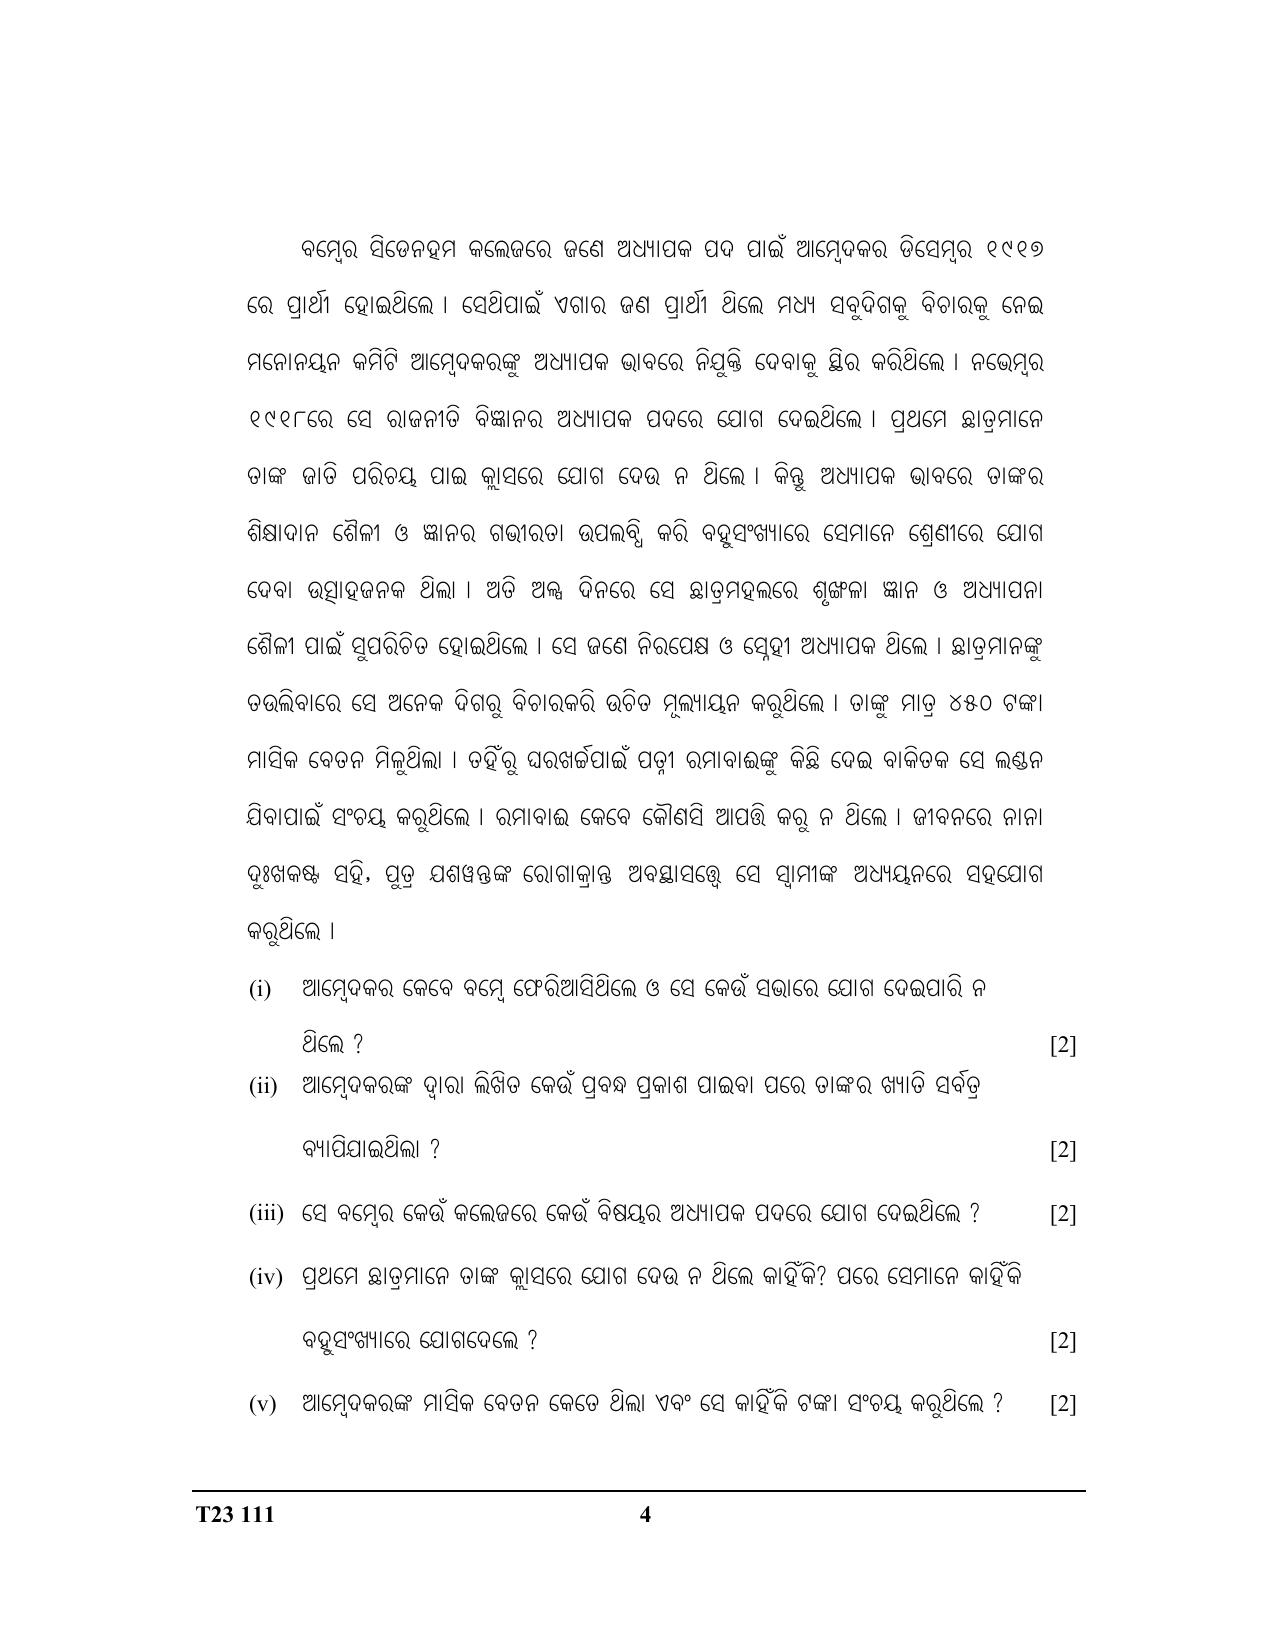 ICSE Class 10 ODIA 2023 Question Paper - Page 4